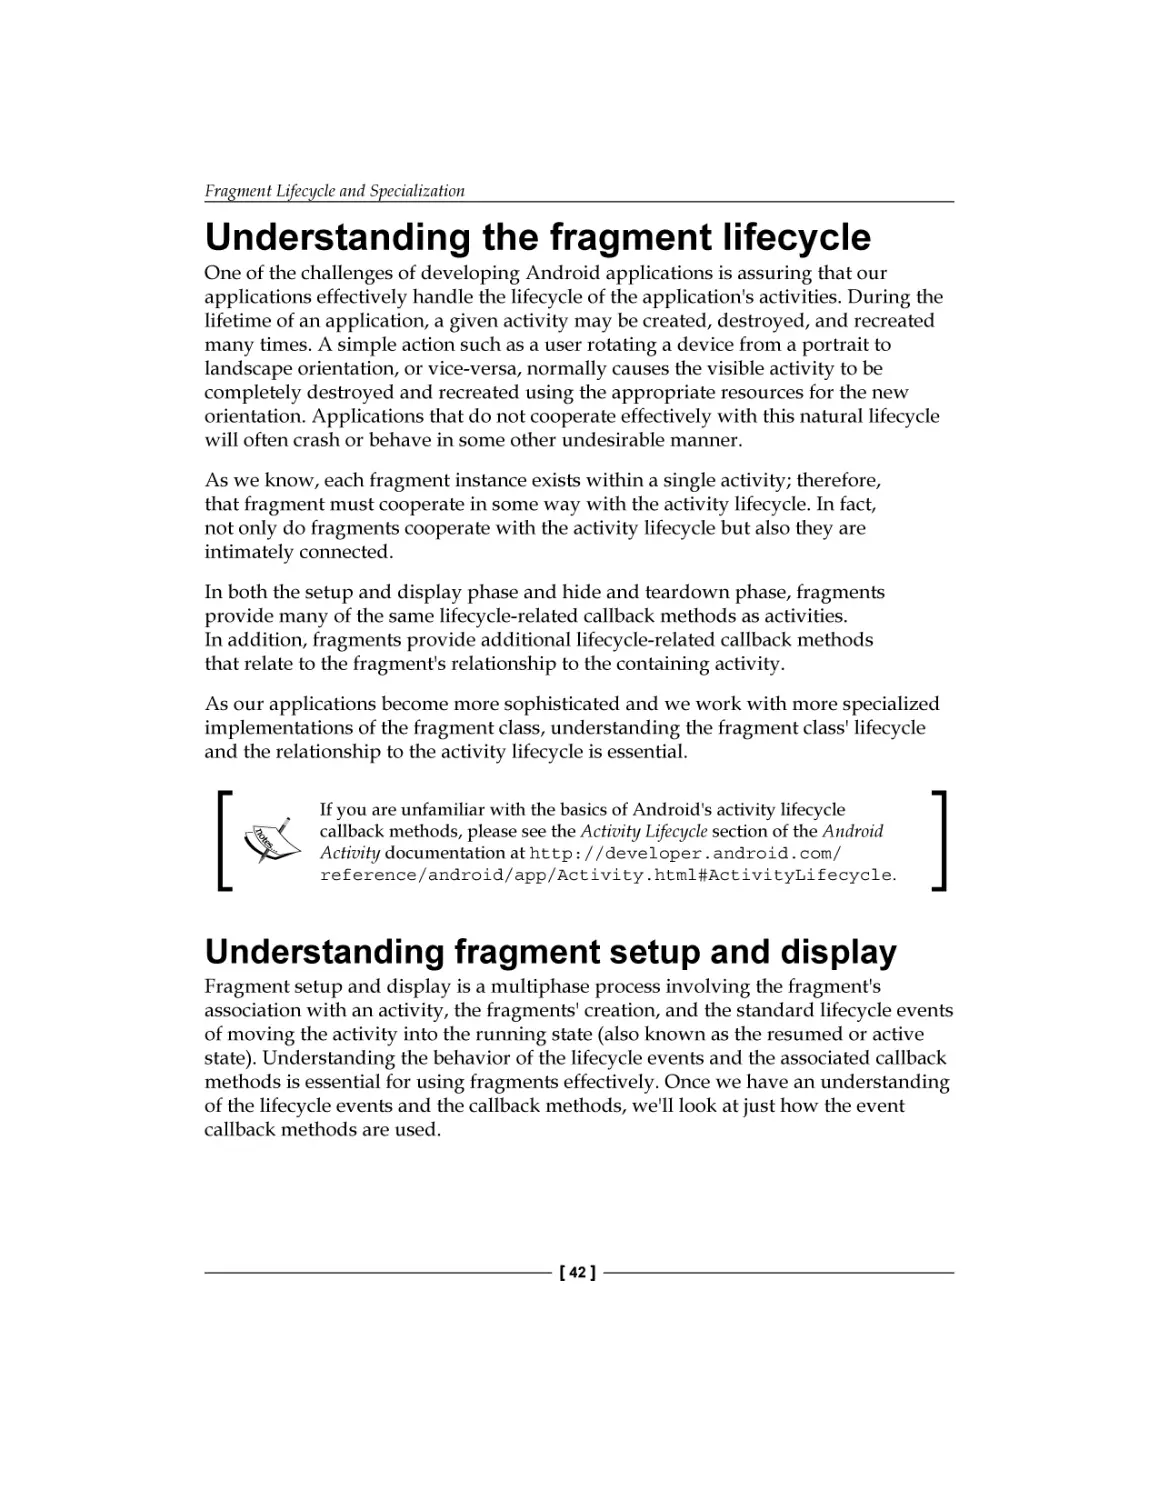 Understanding fragment lifecycle
Understanding fragment setup and display